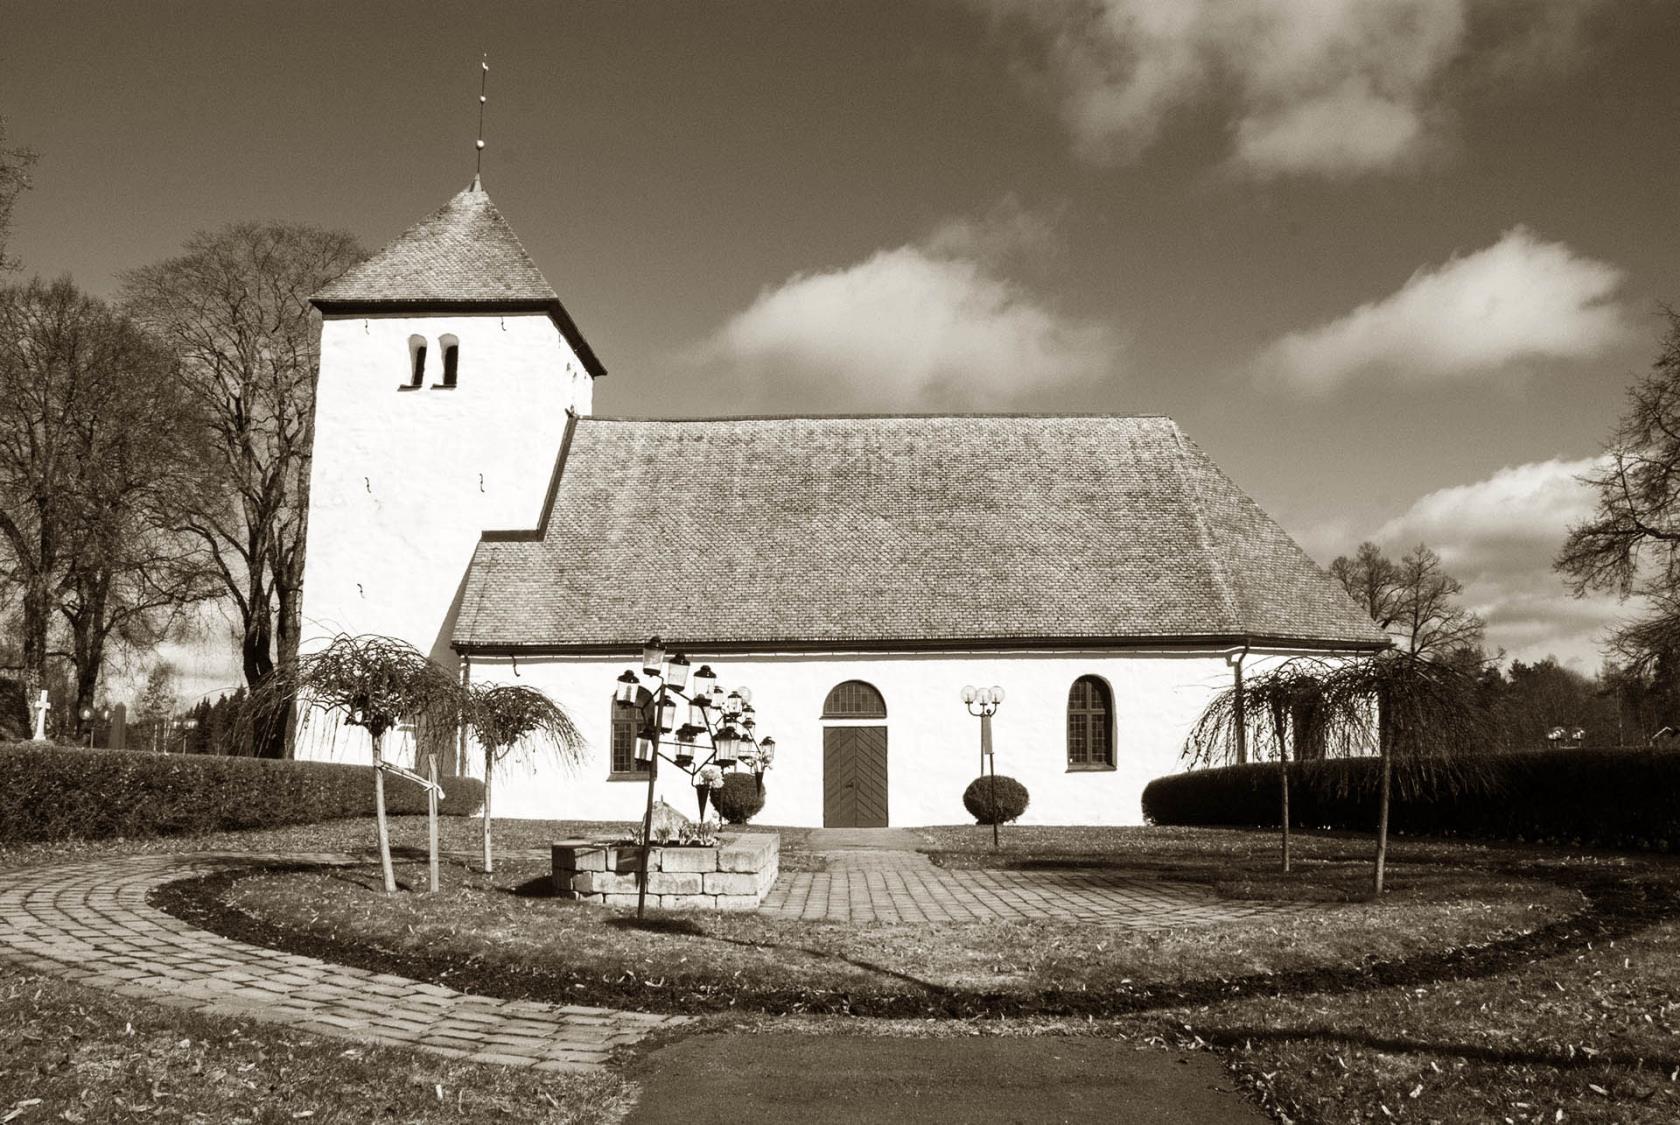 Boda kyrka